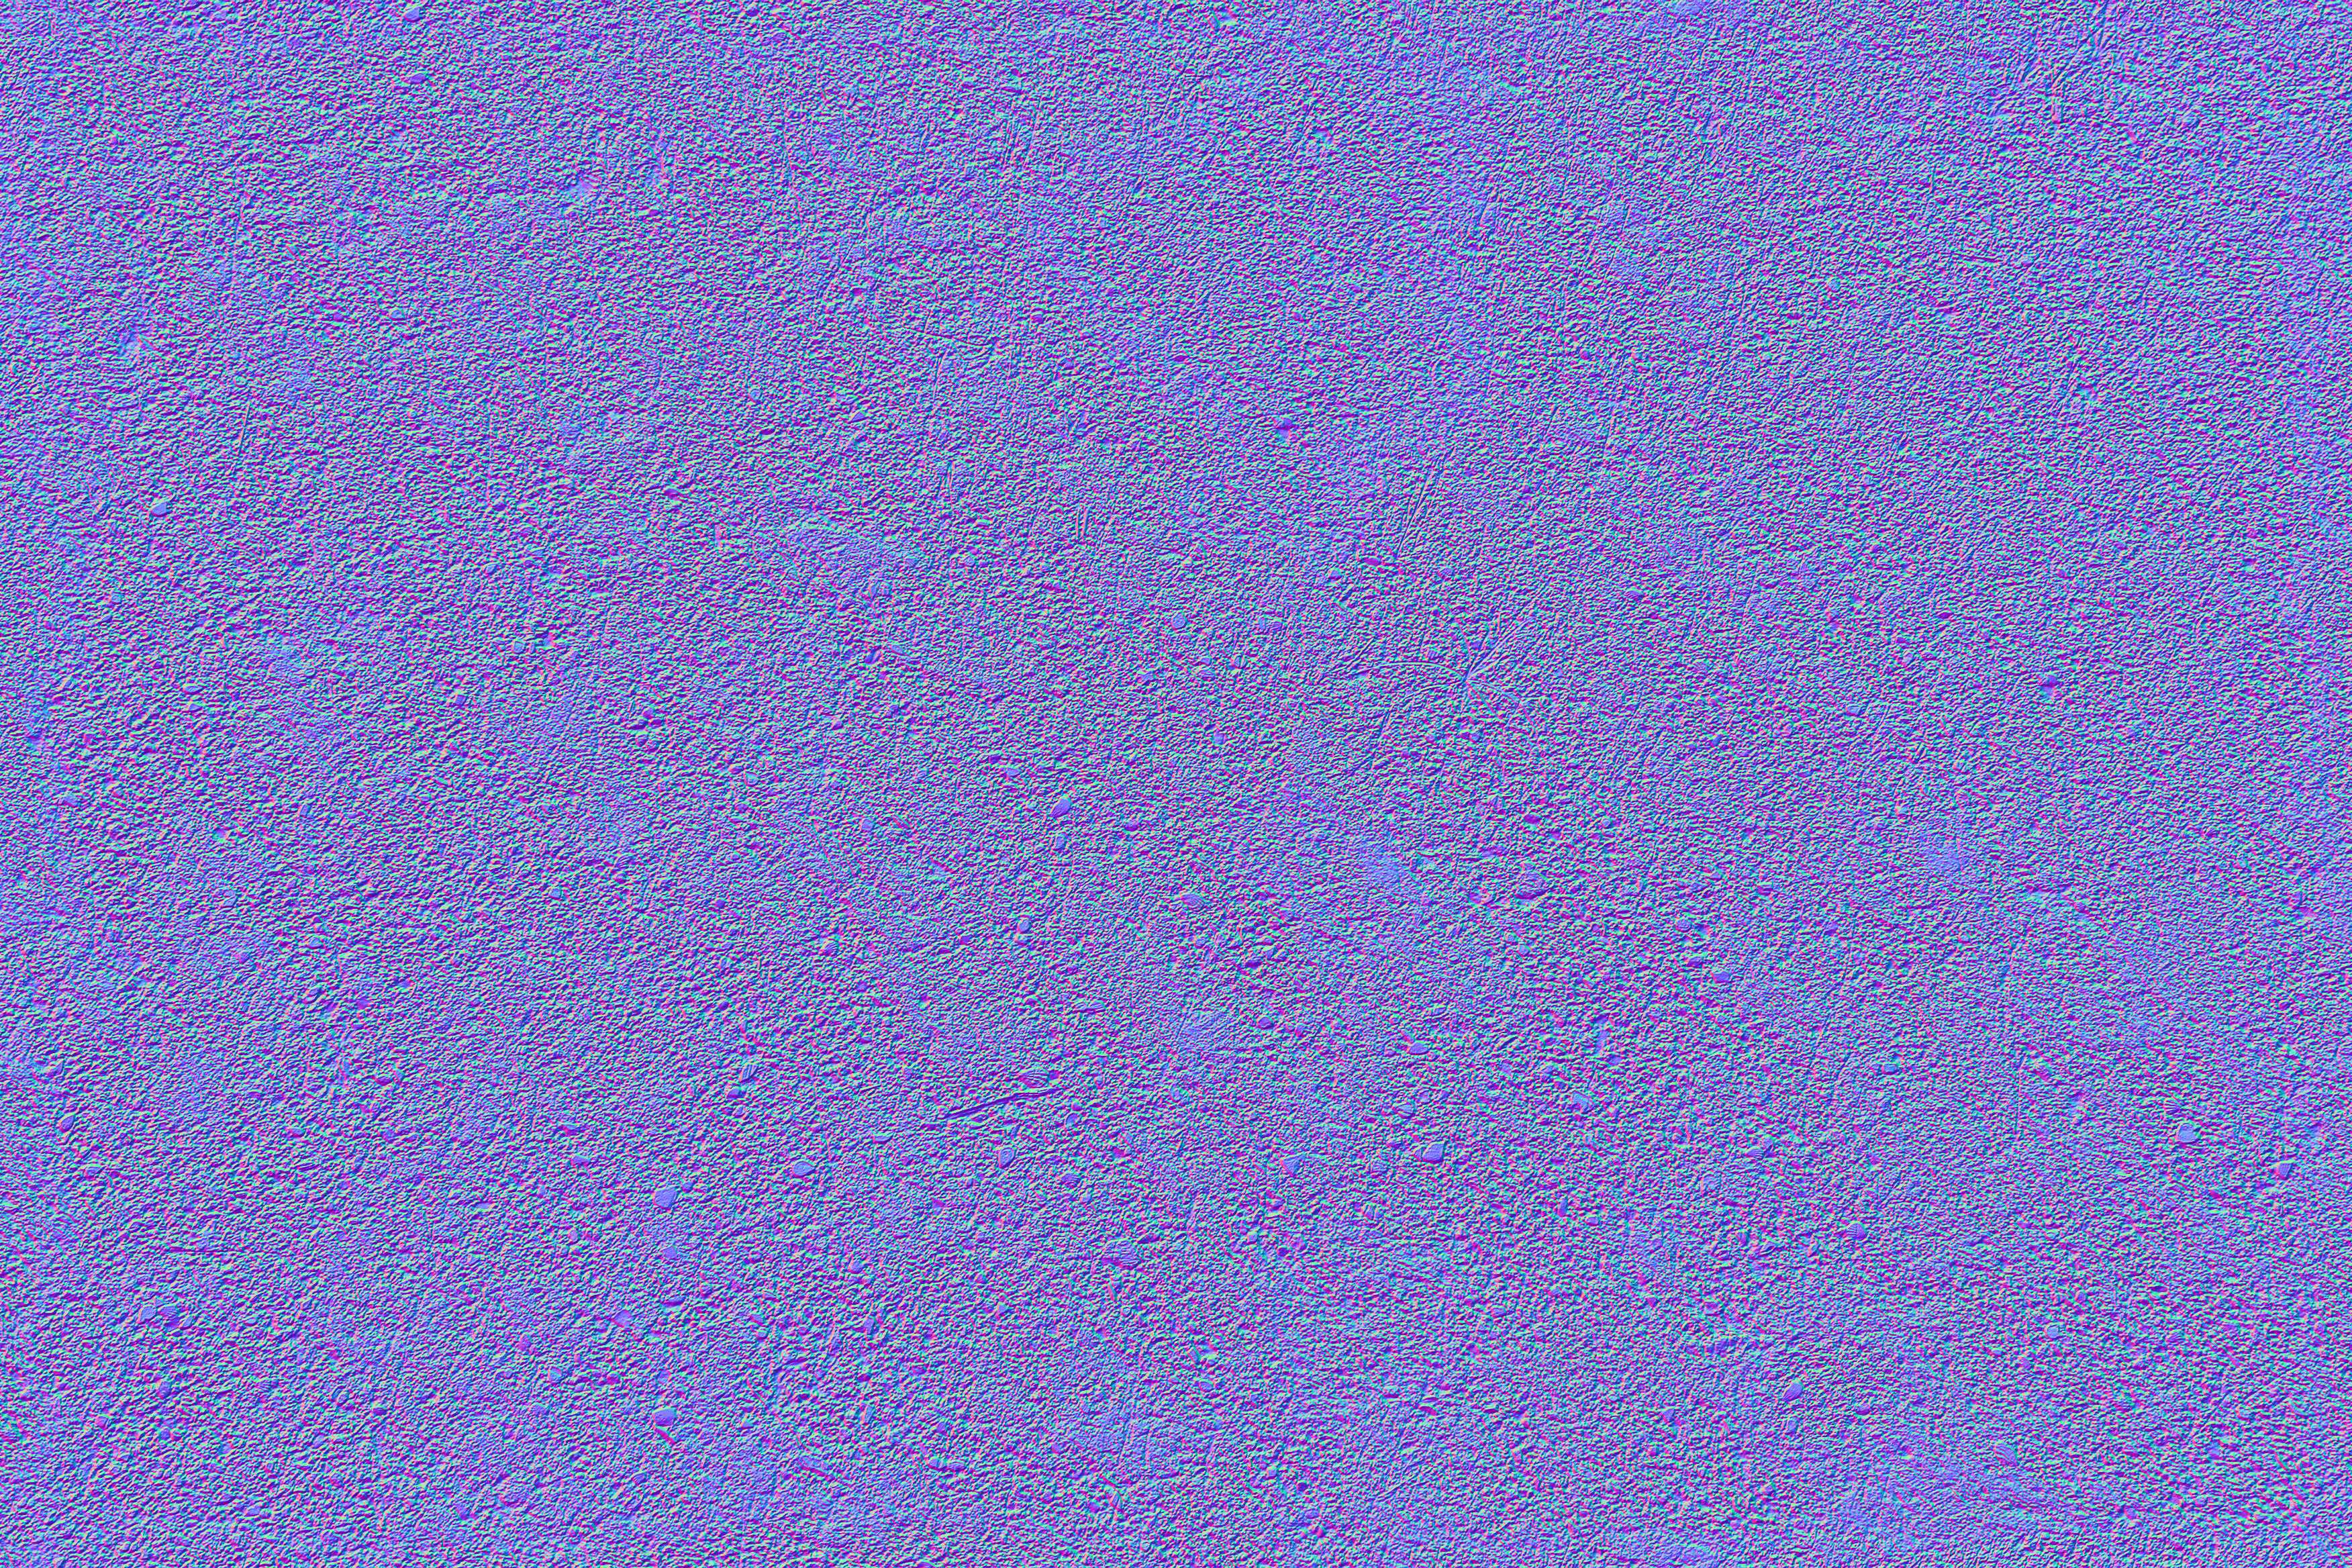 Sand Coarse Normal Map Texture Bump Map Texture Adesivi A Muro Di Images